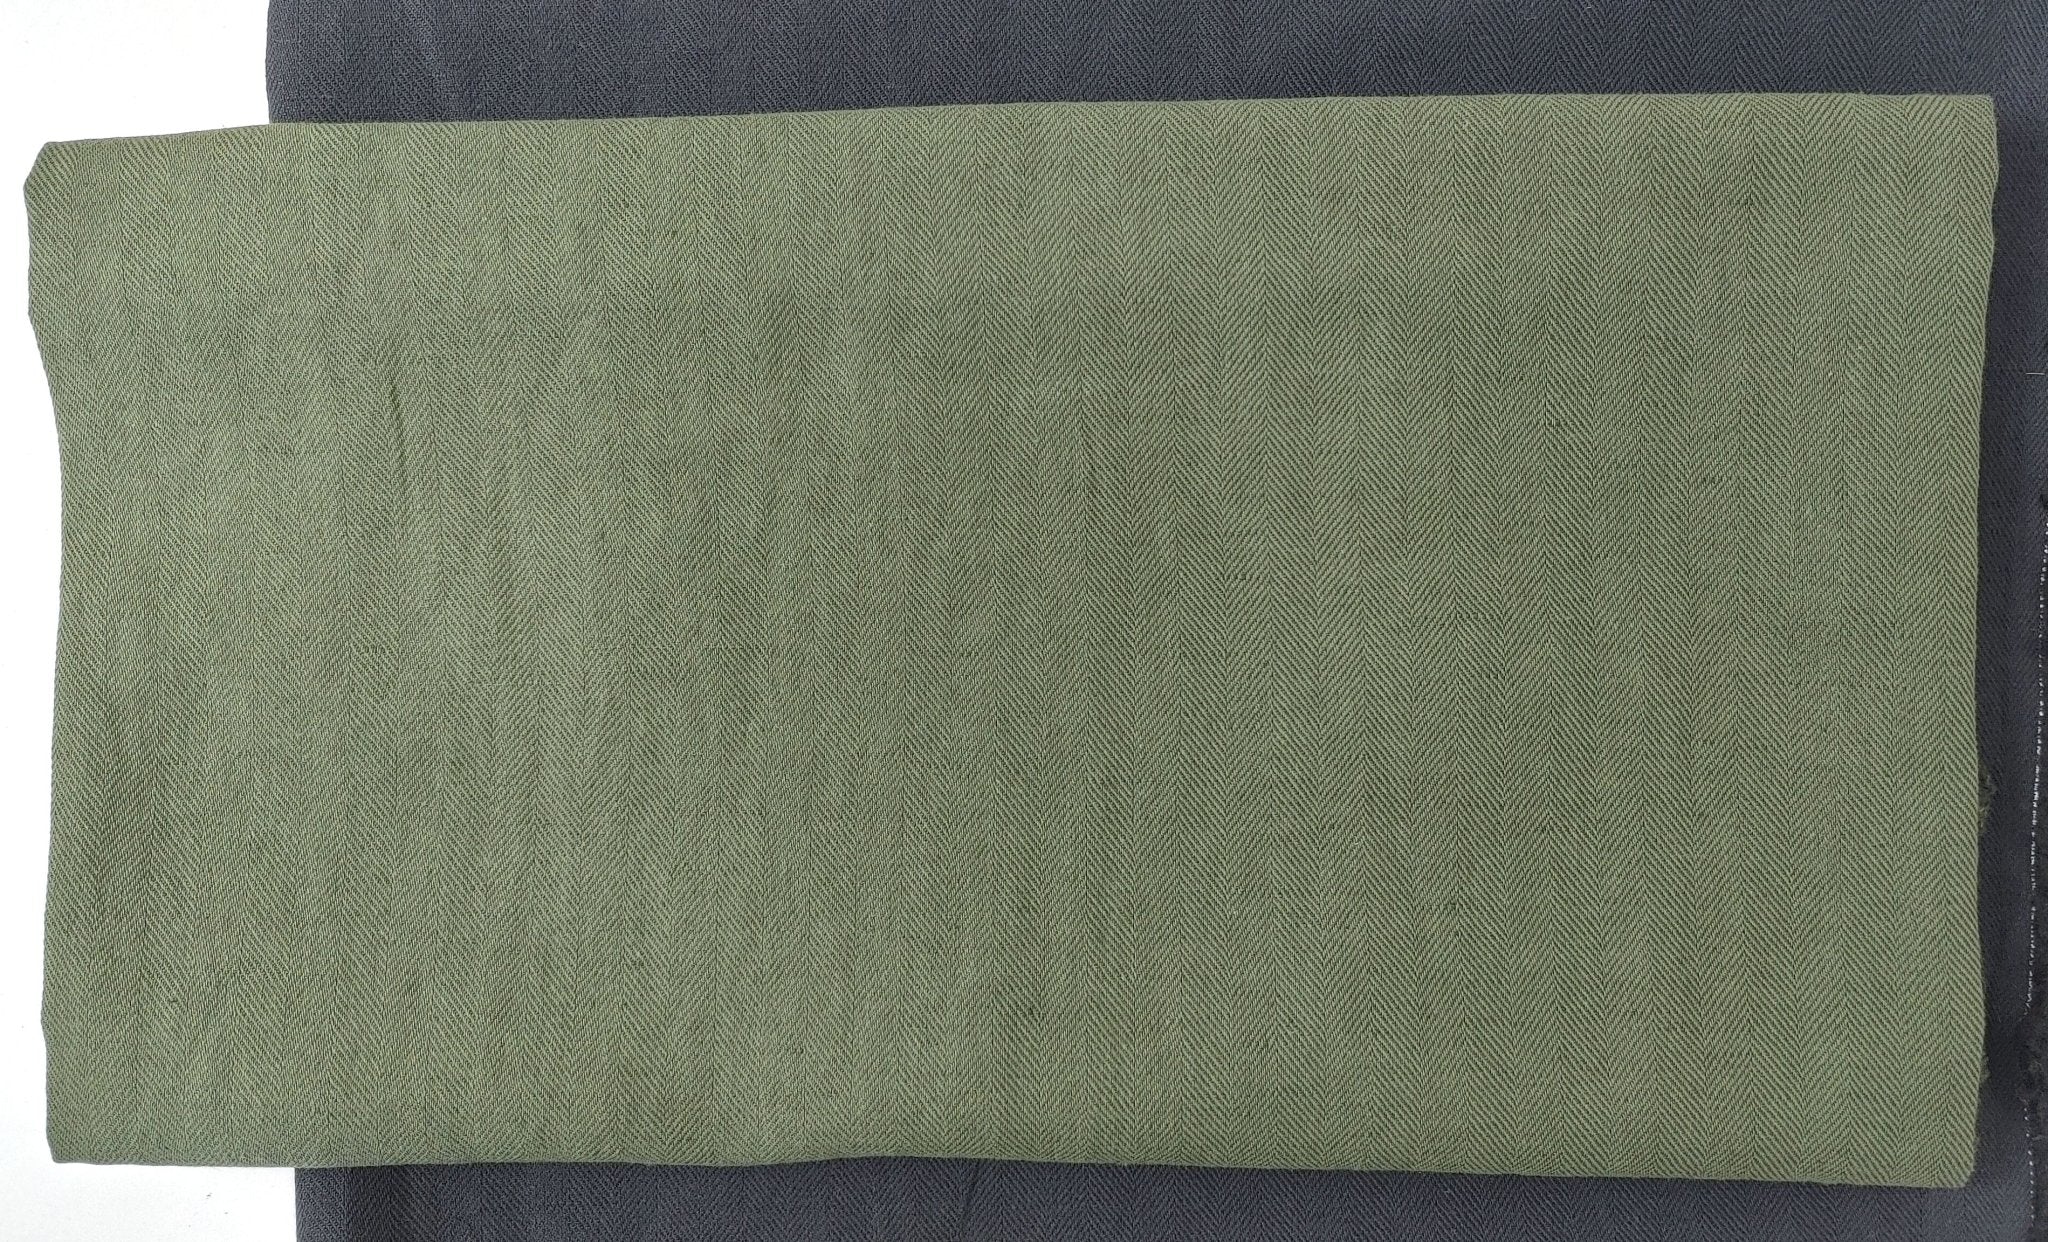 Linen Cotton HBT Herringbone Twill Solid Fabric Medium Weight 6678 6707 6820 7095 7659 7660 7661 - The Linen Lab - Green(Dark)